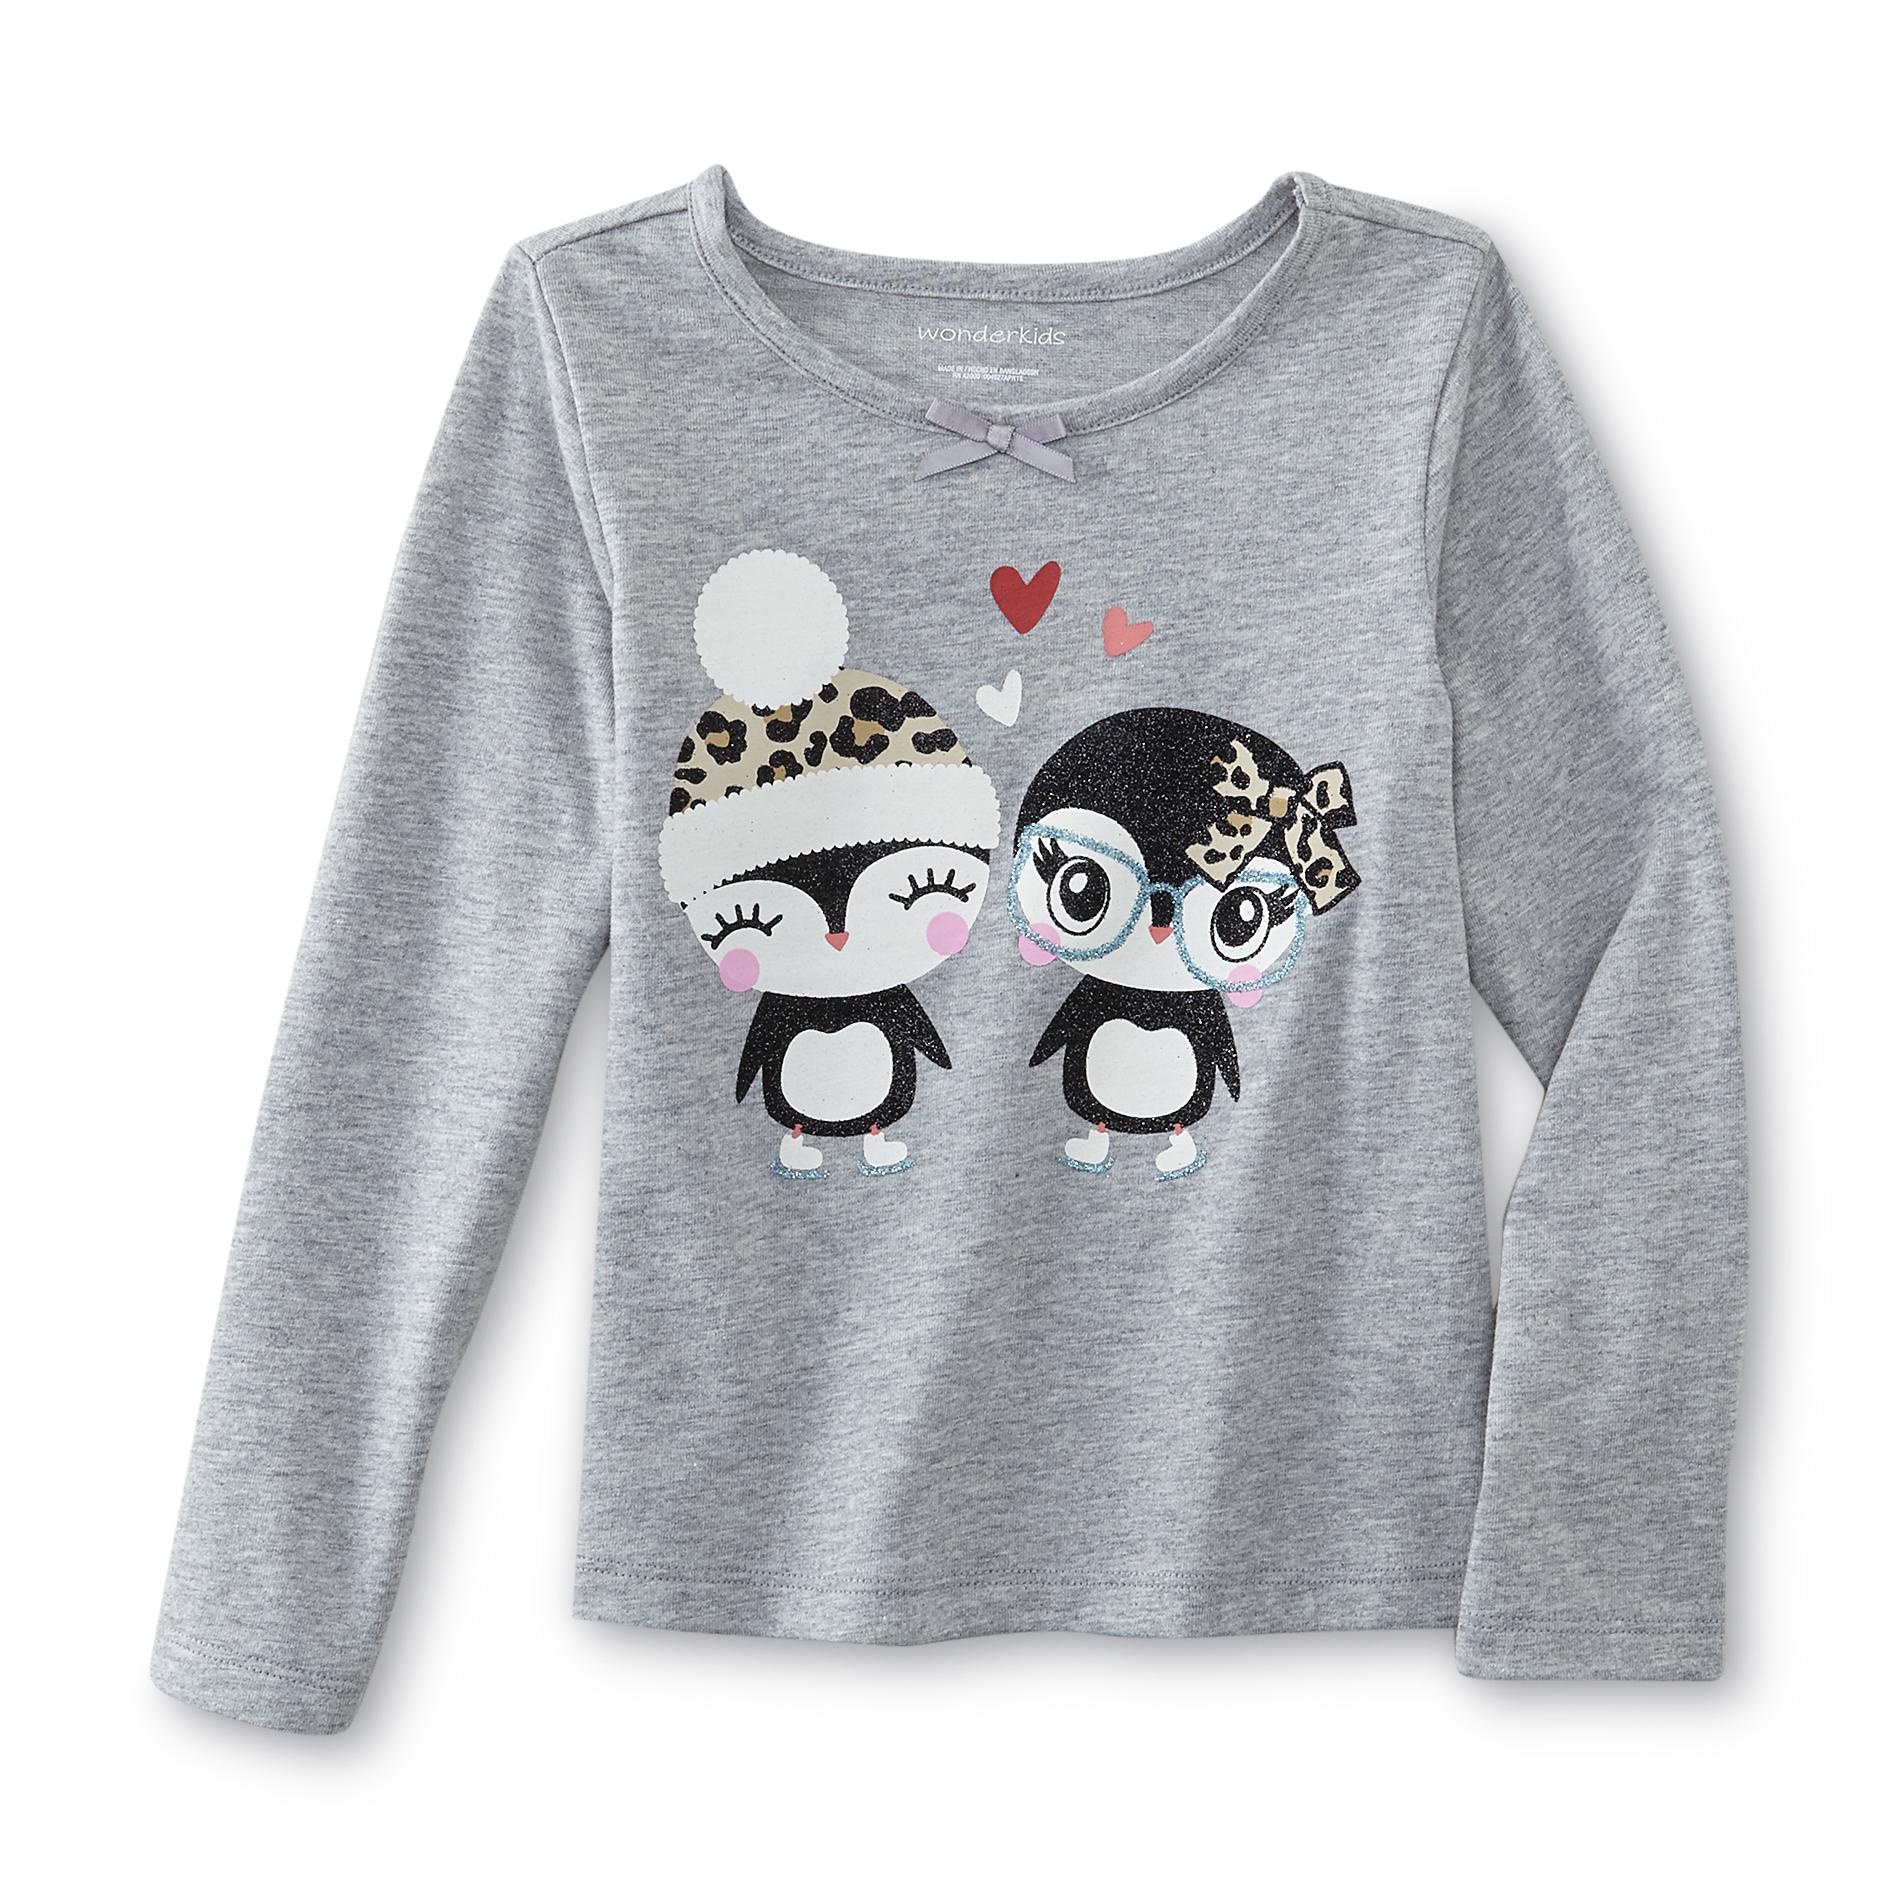 Infant & Toddler Girl's Graphic T-Shirt - Penguins